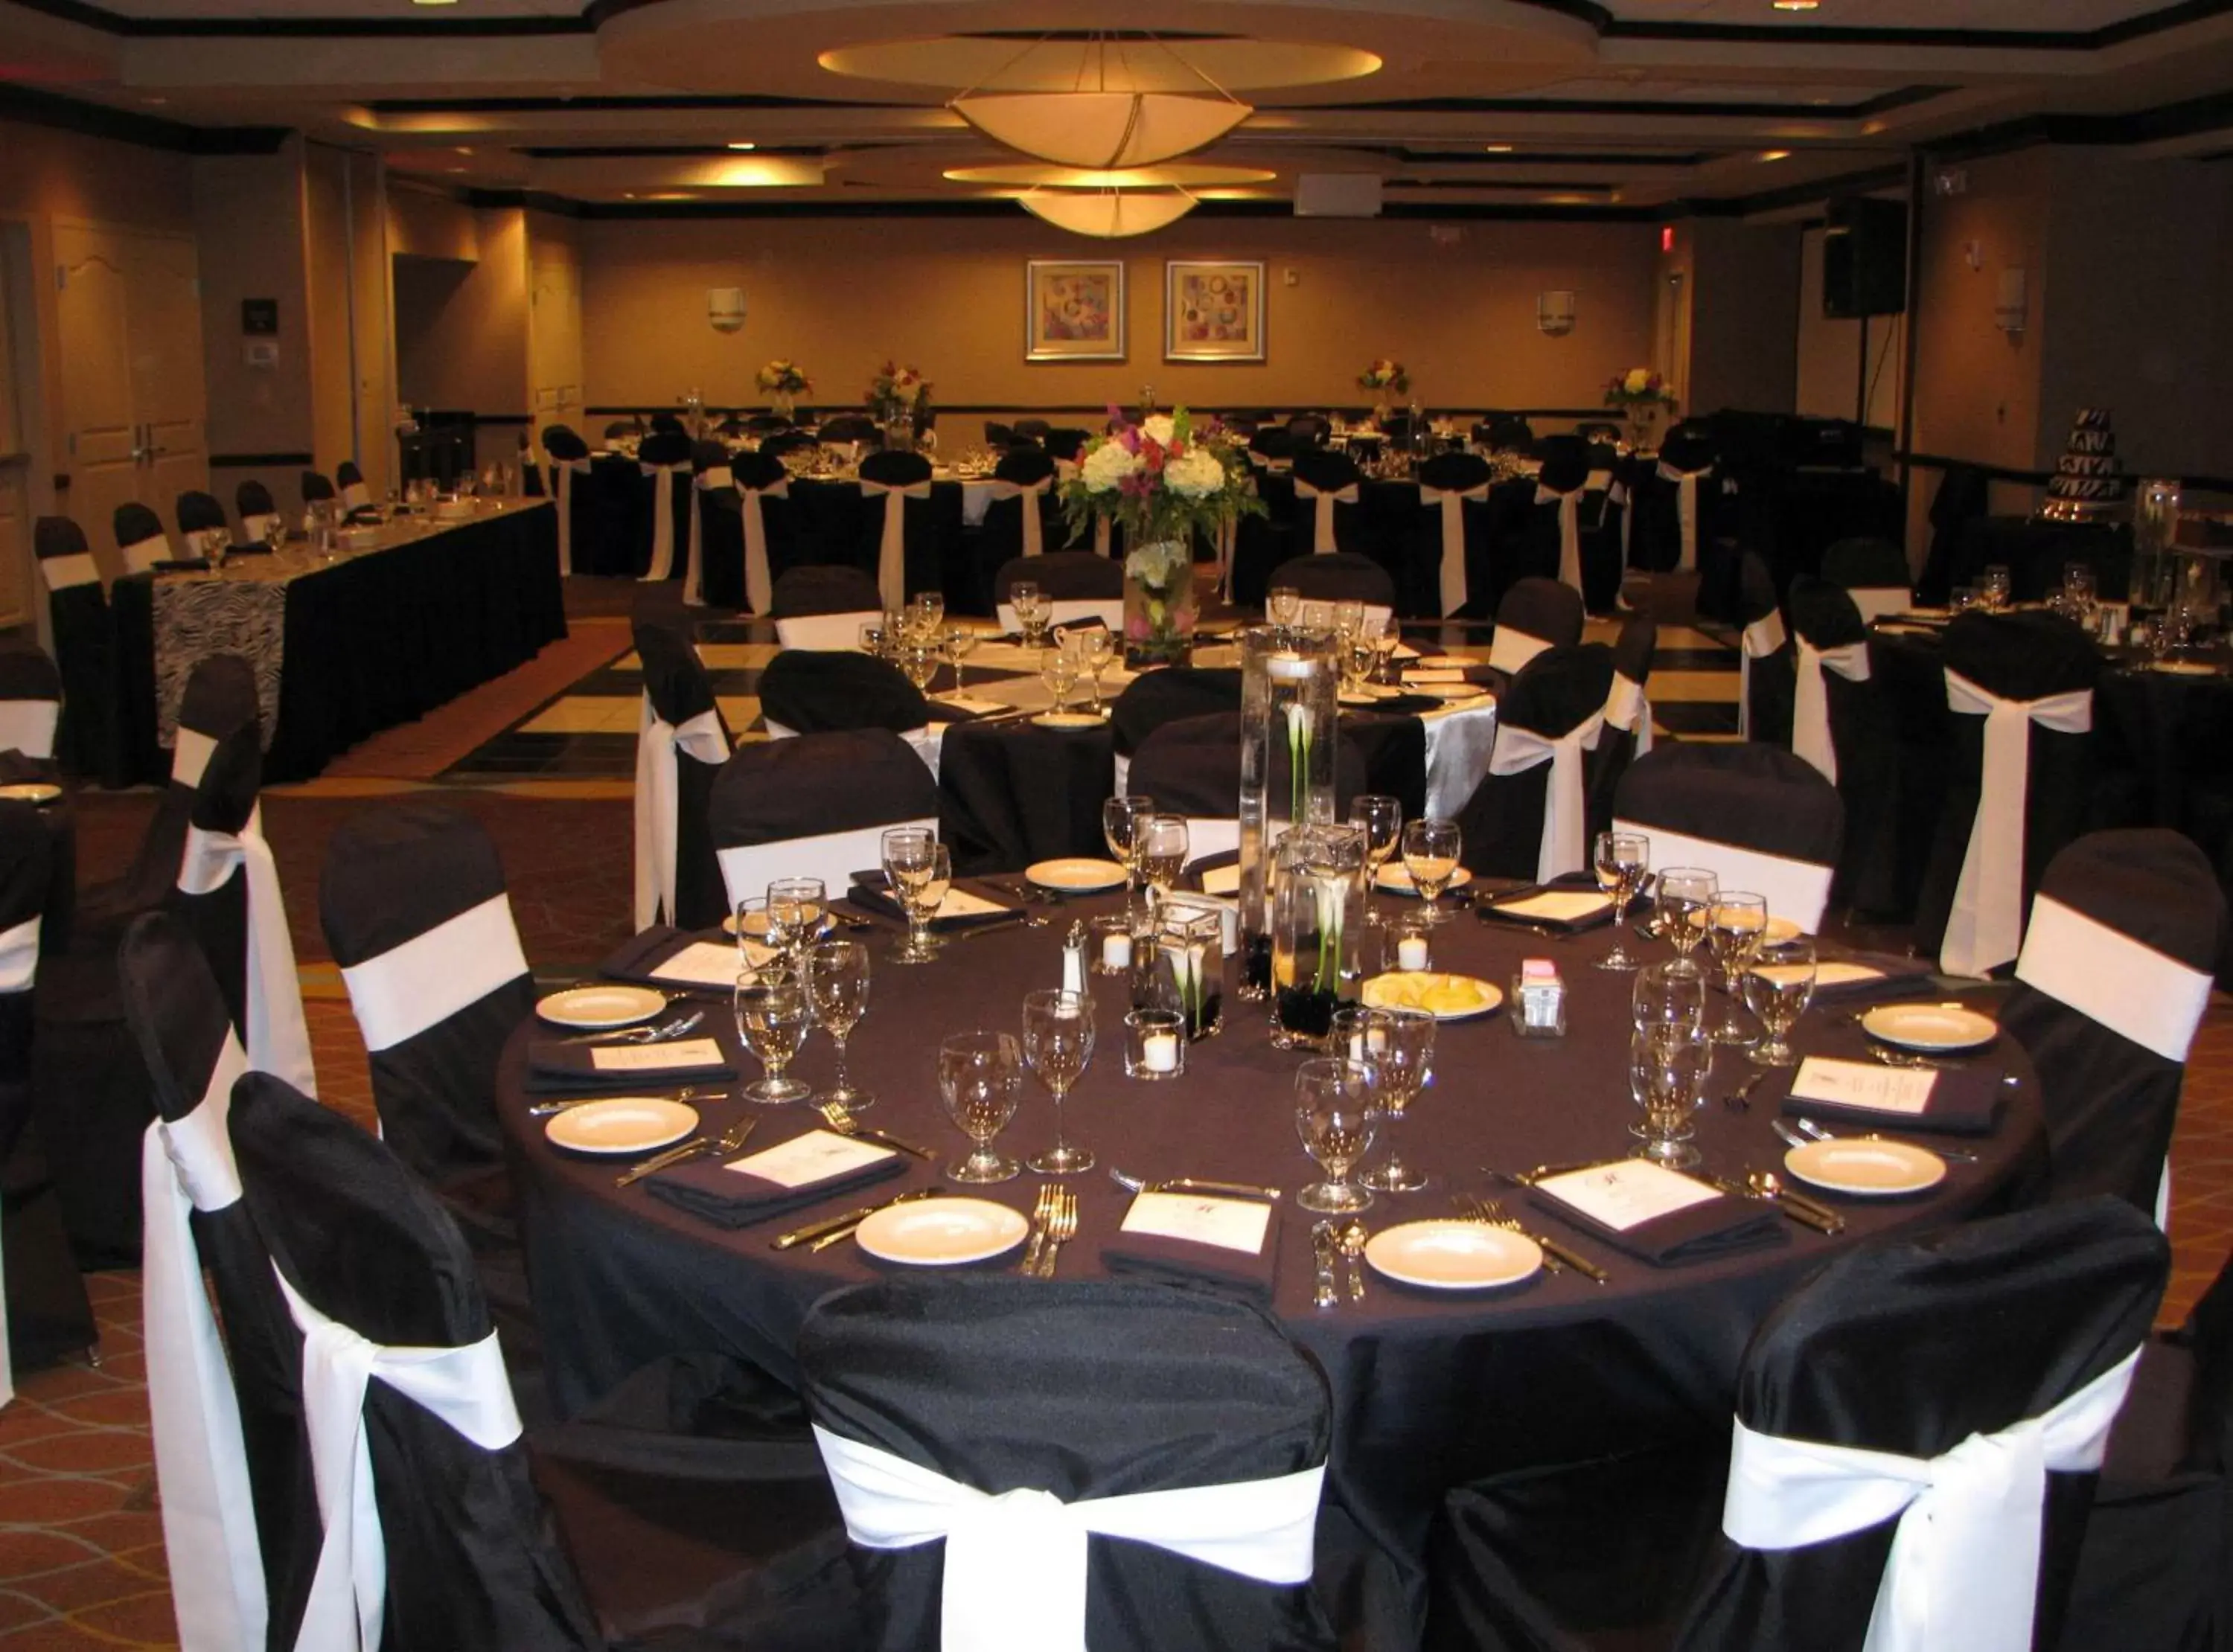 Meeting/conference room, Banquet Facilities in Hilton Garden Inn Clarksville